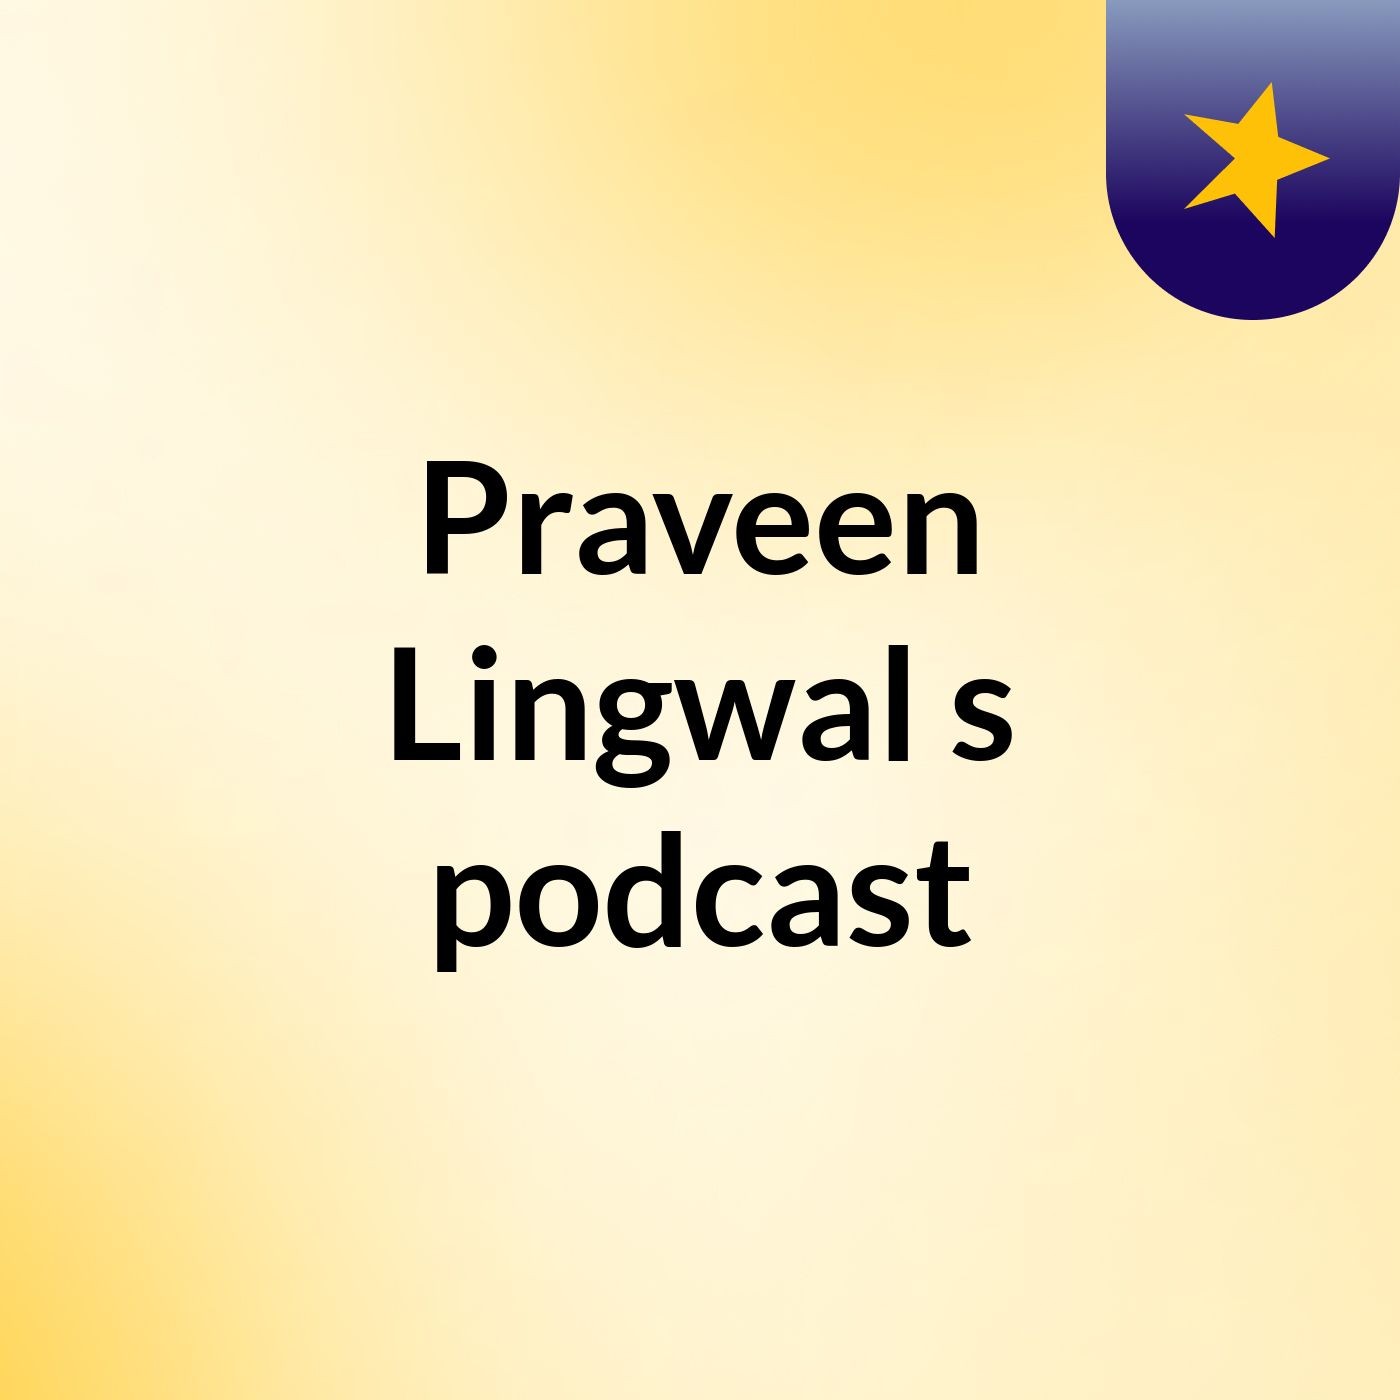 Praveen Lingwal's podcast